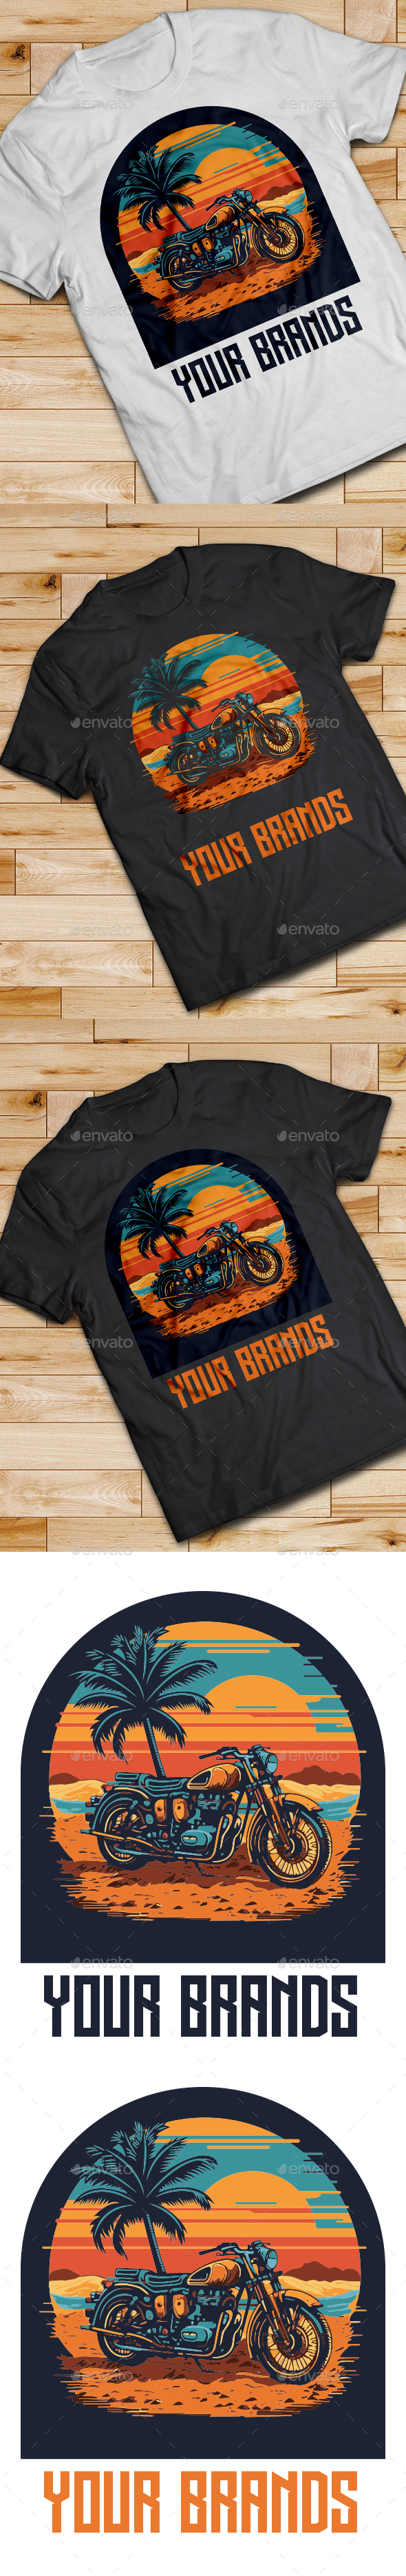 Motorbike T-shirt Design